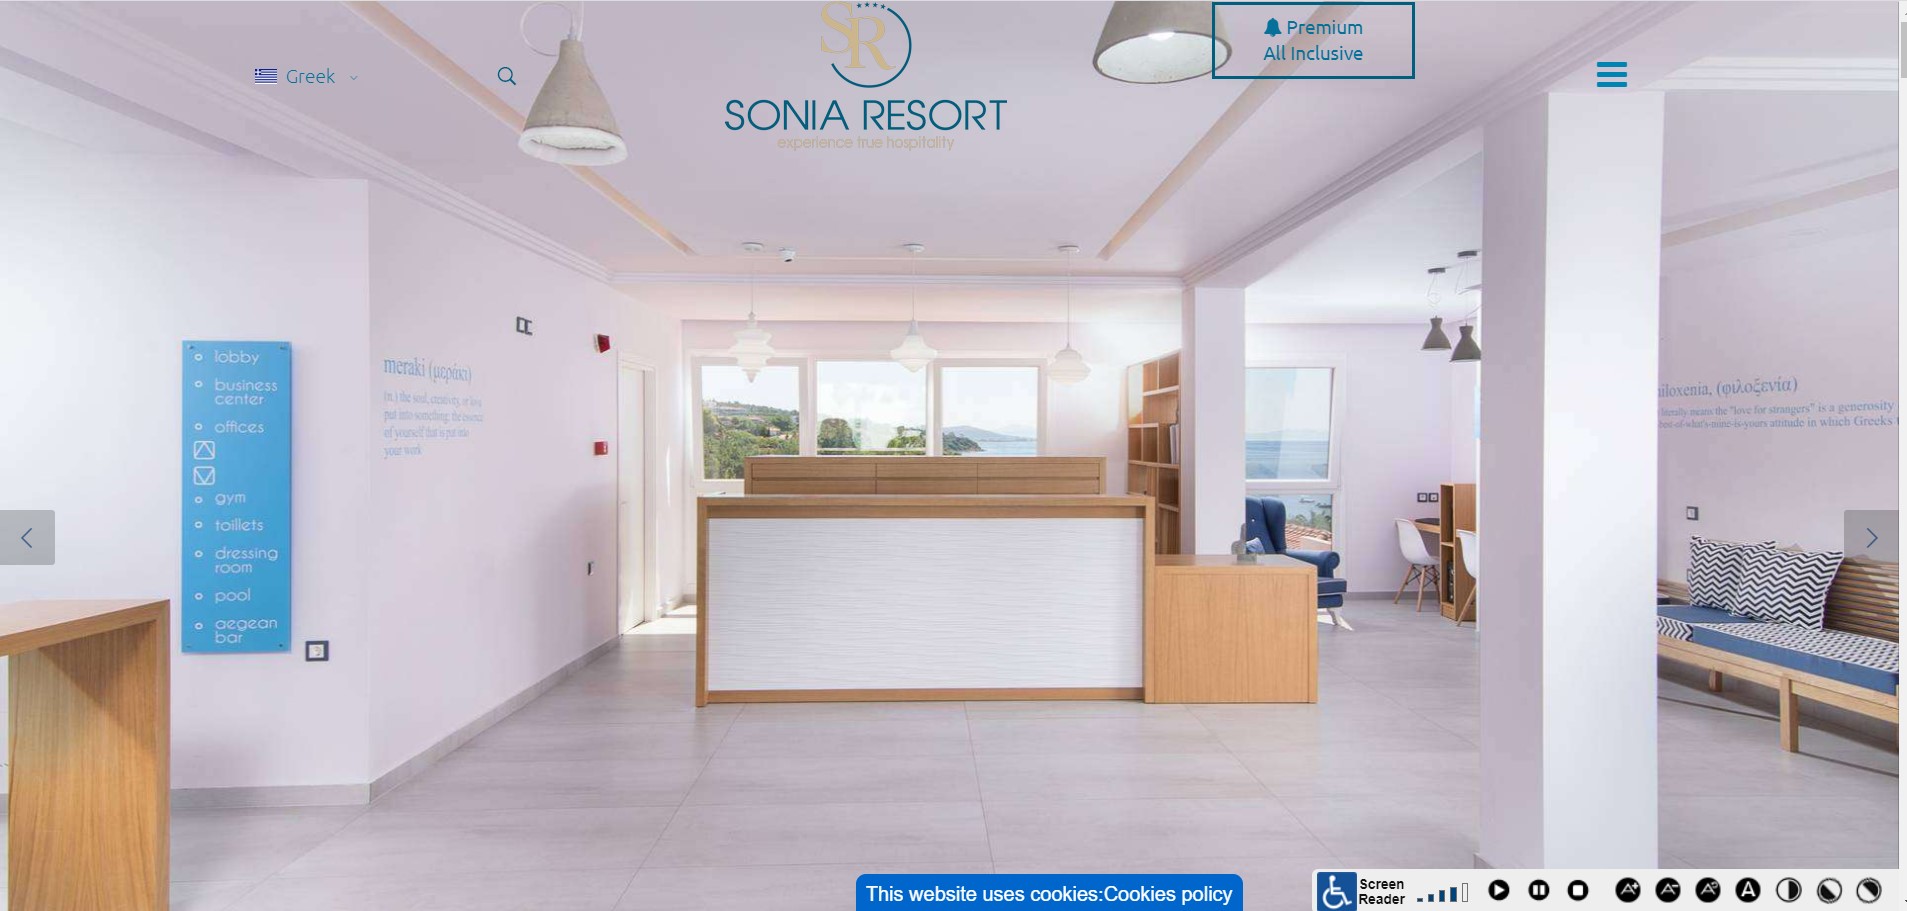 Sonia Resort